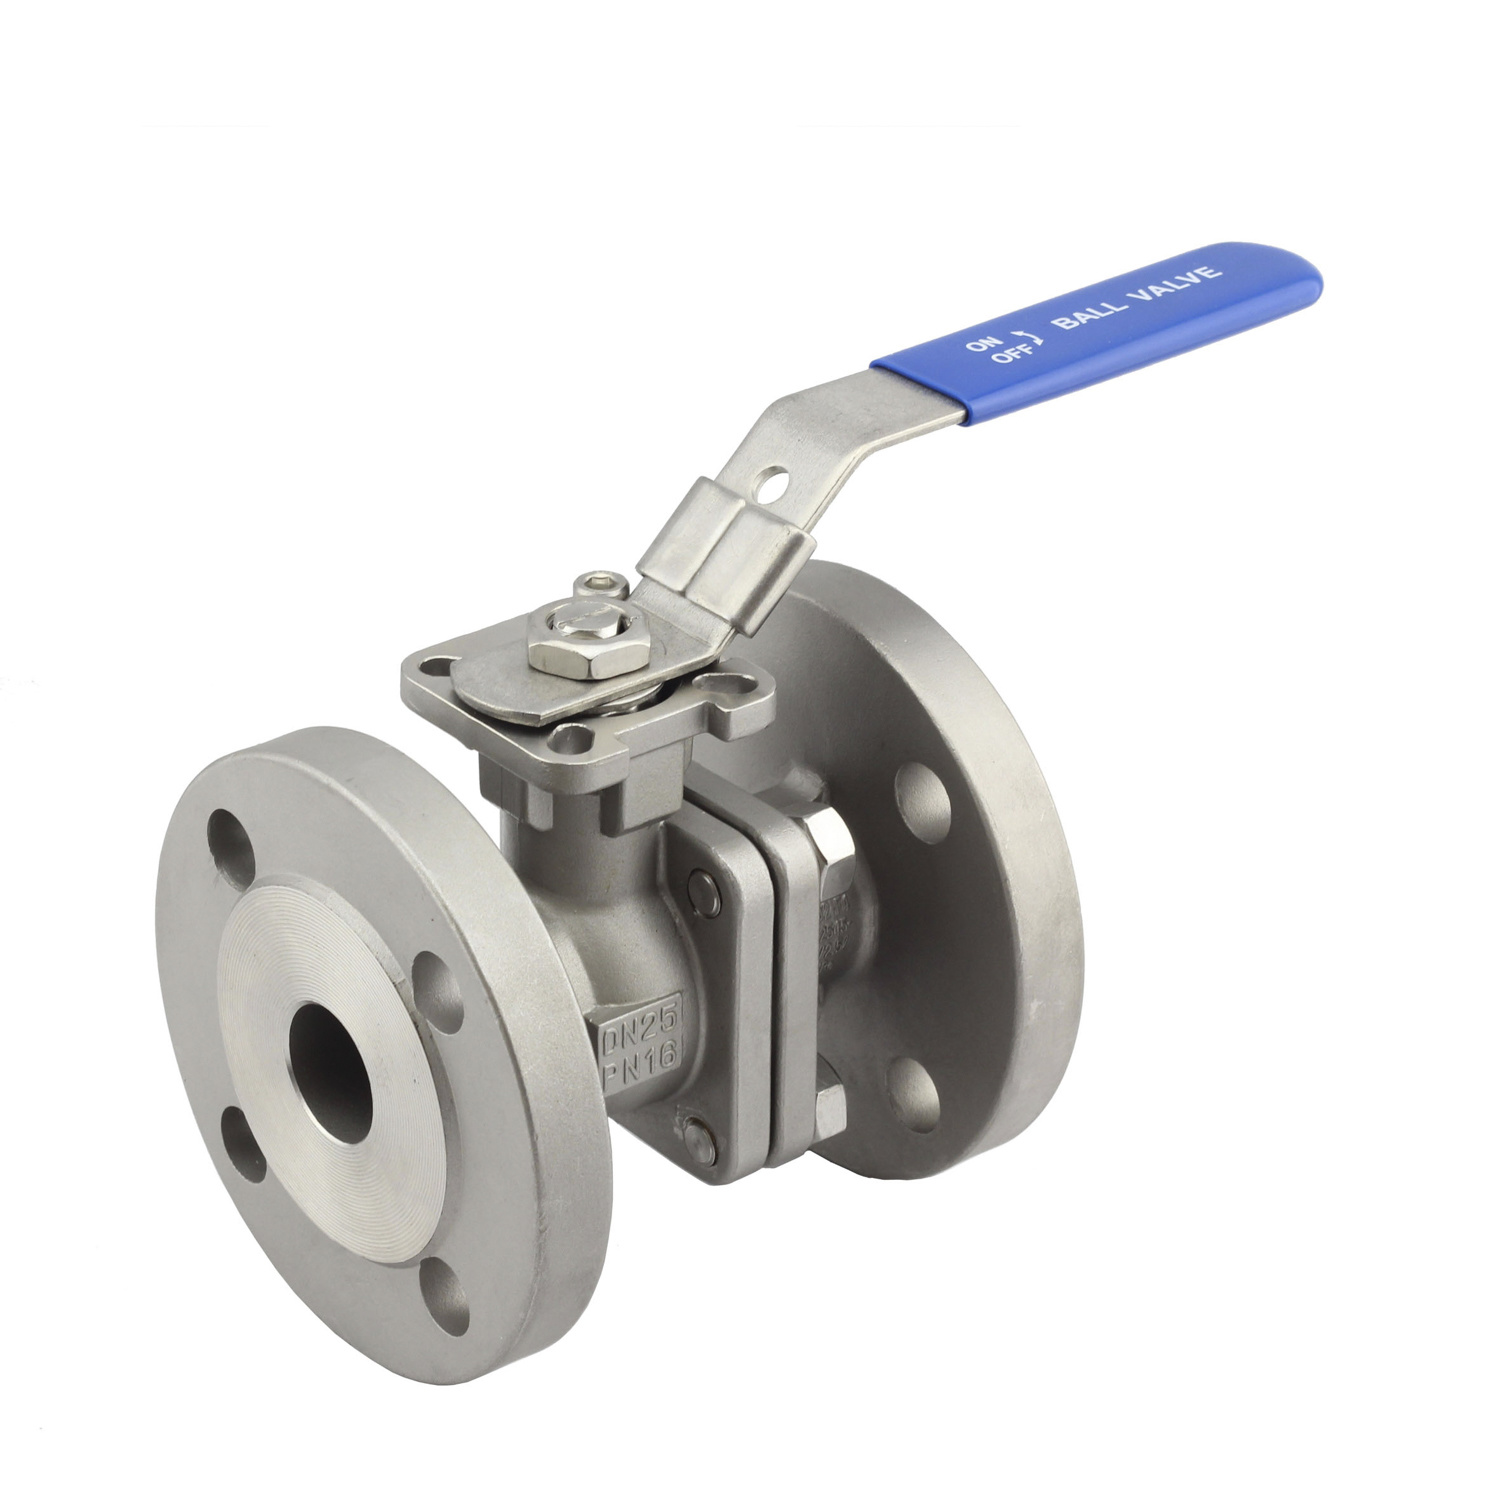 3PC Flanged ball valve(DIN)